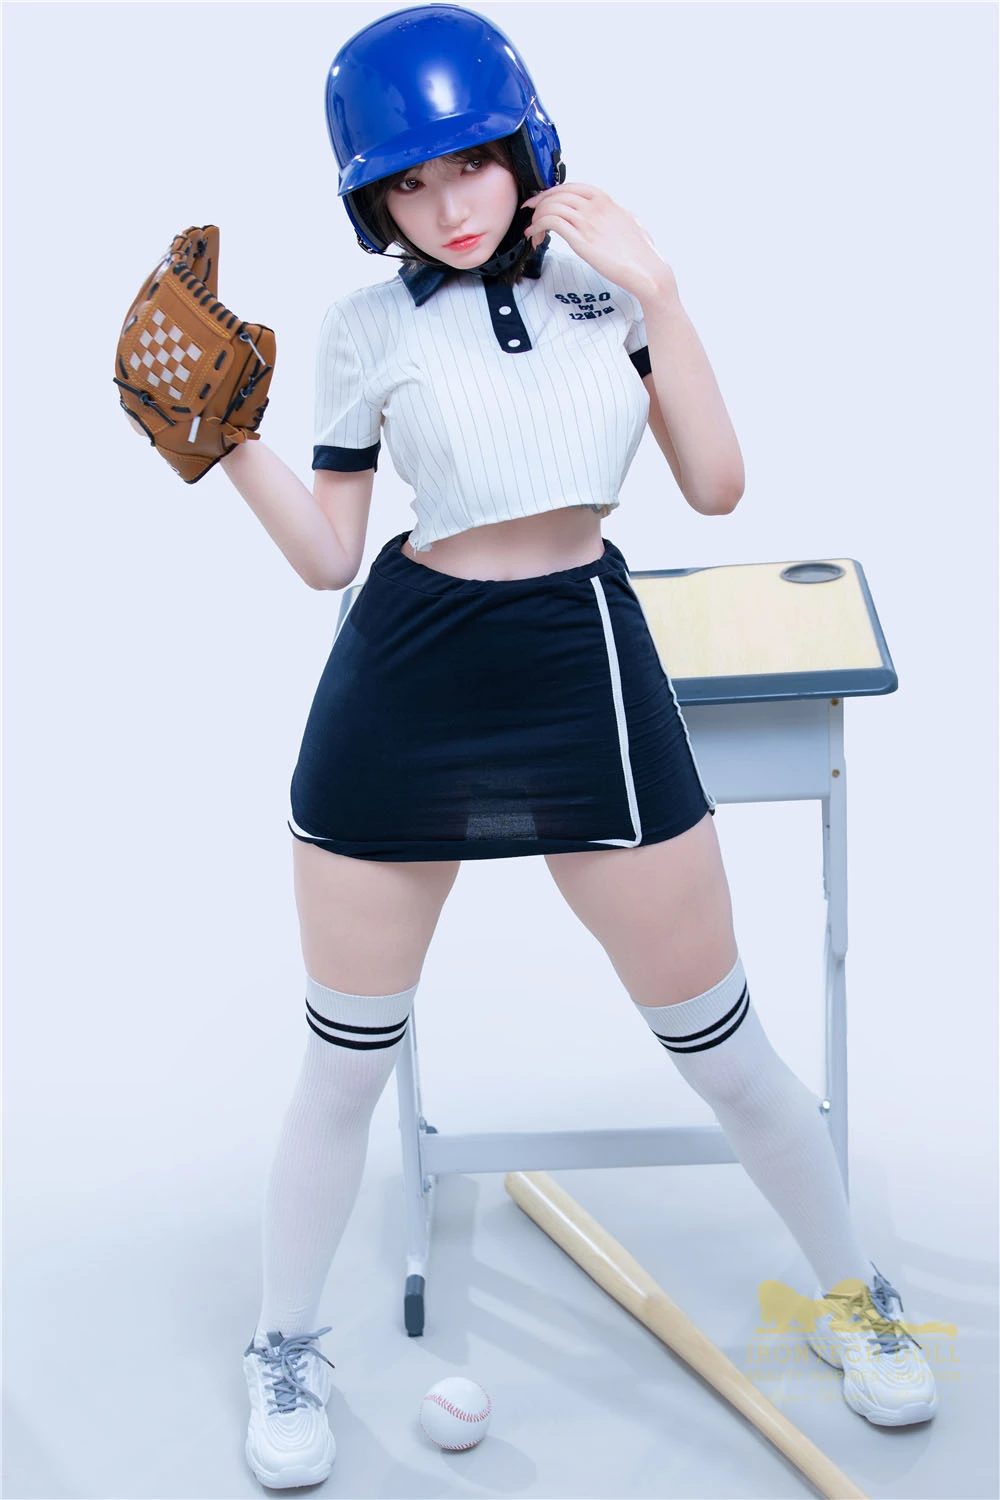  love doll baseball cosplay